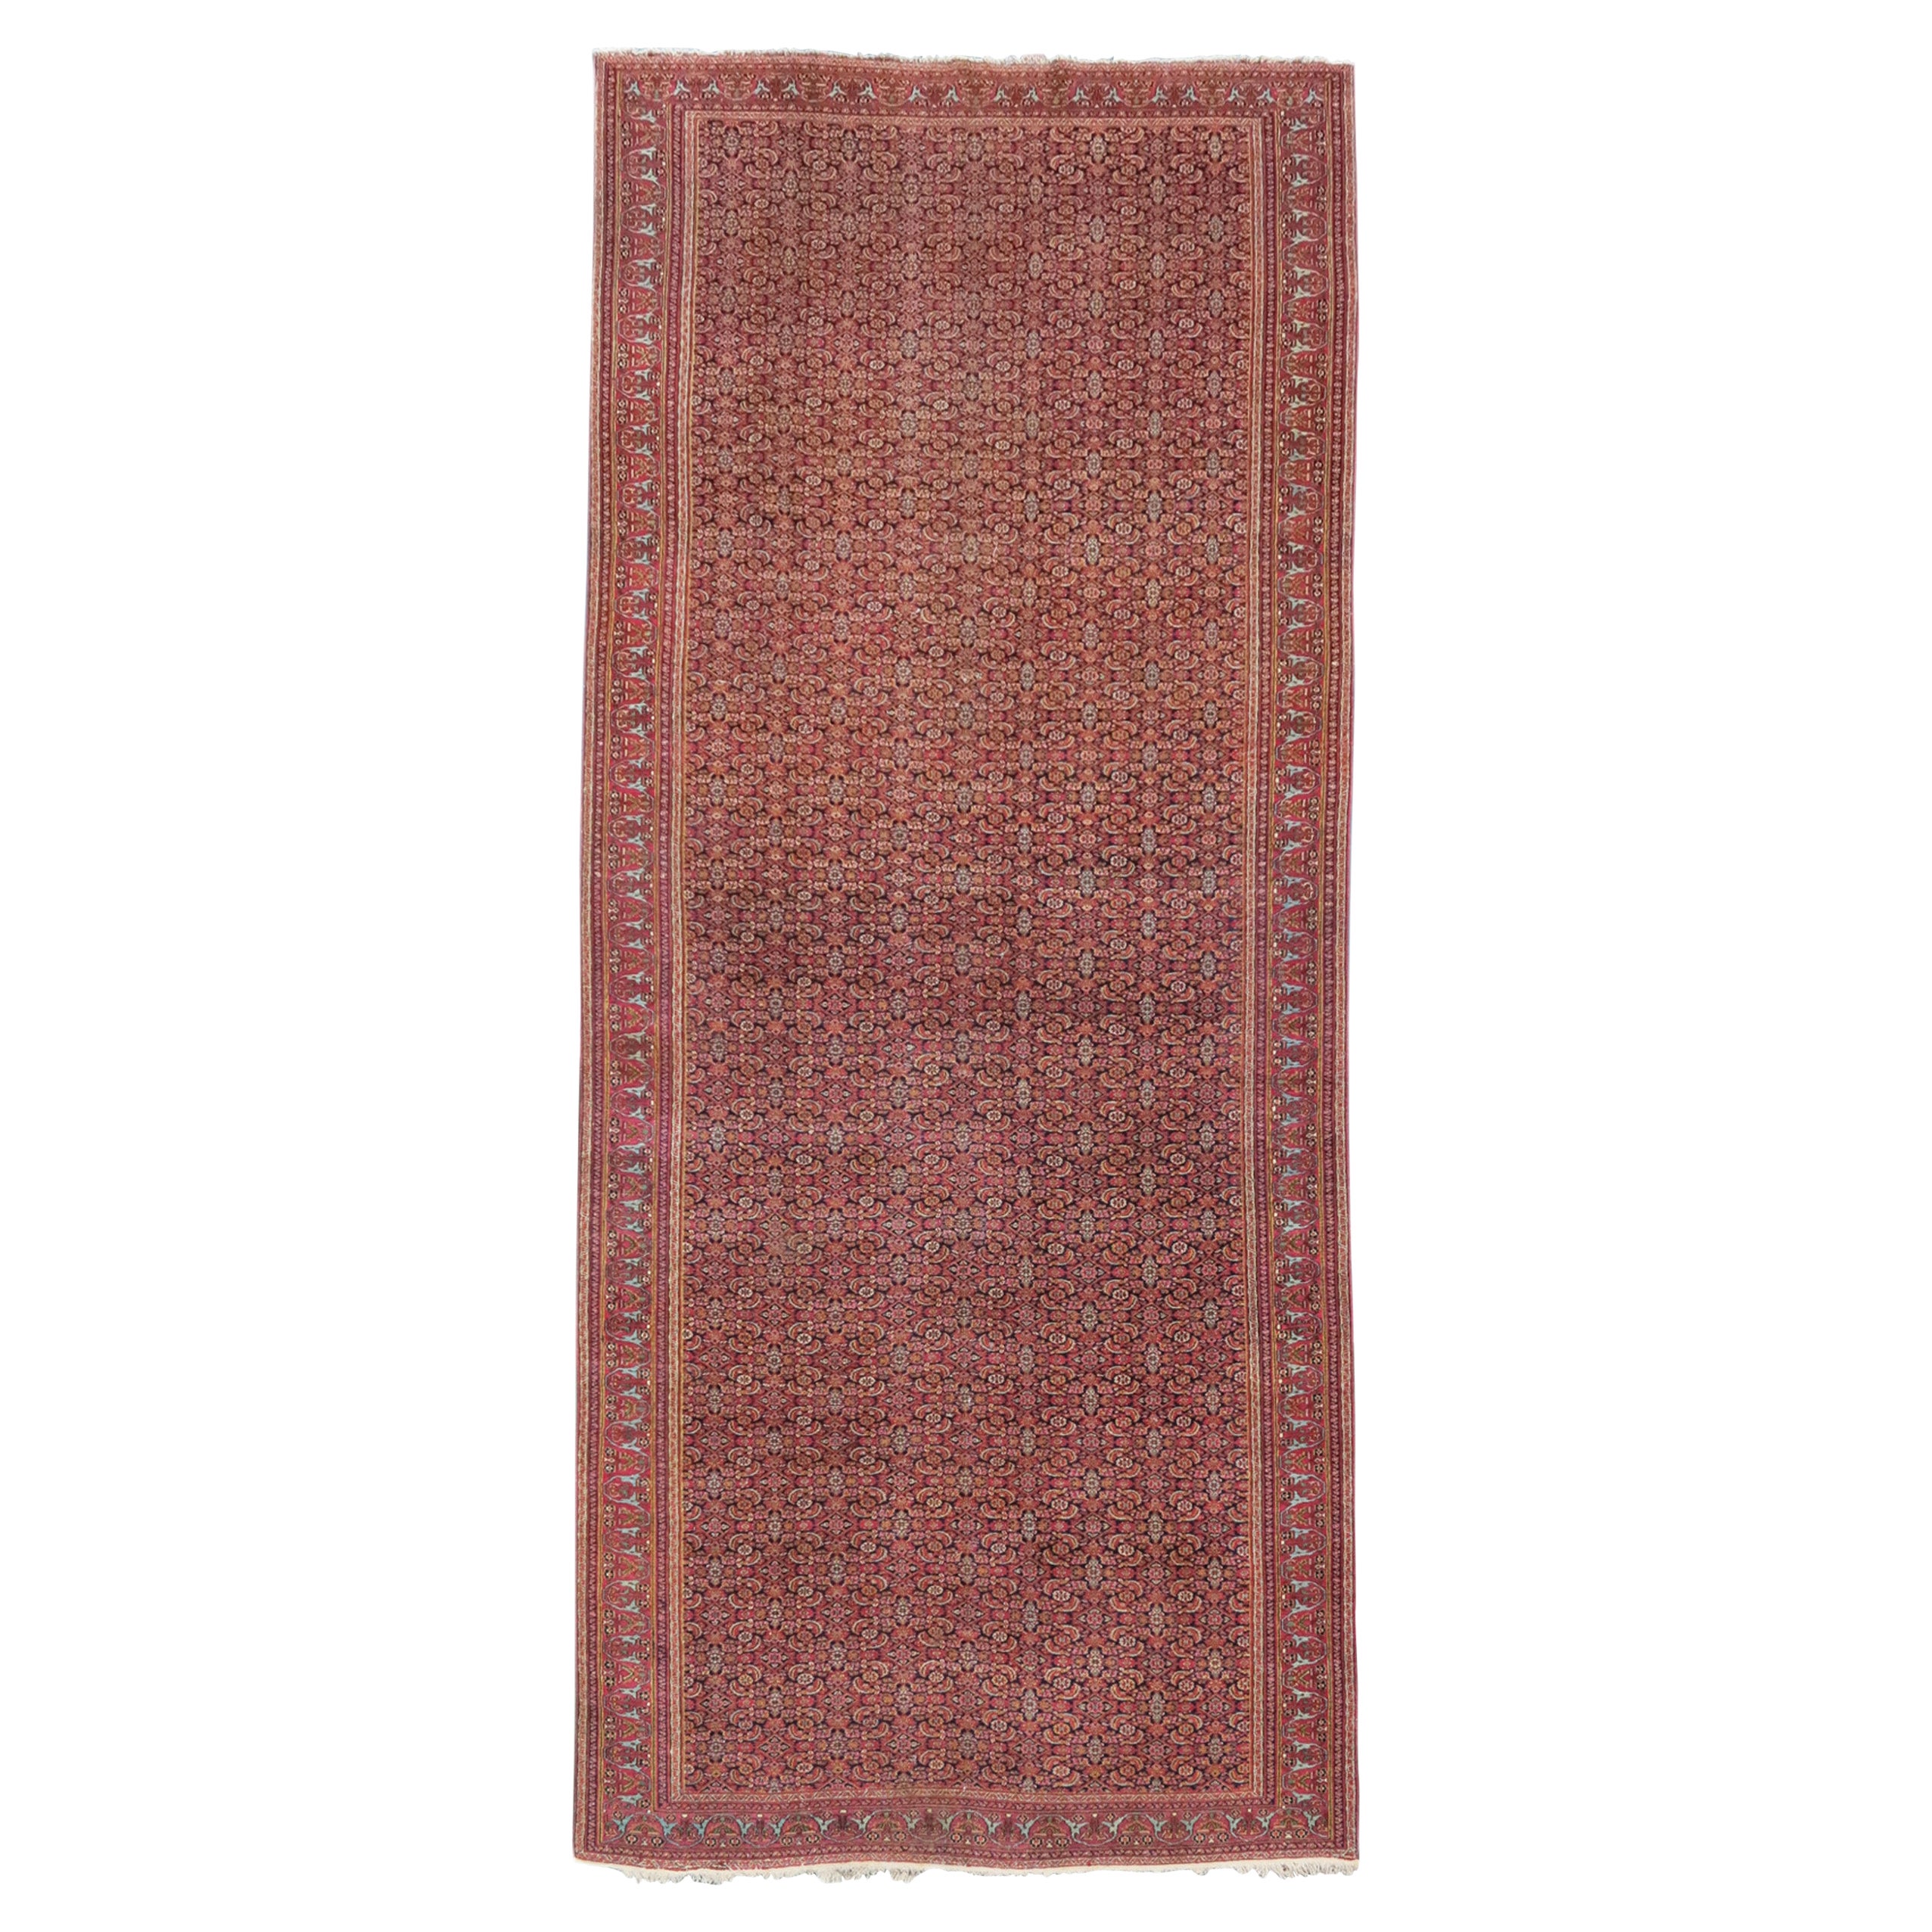 Khorassan Gallery Carpet, Late 19th century